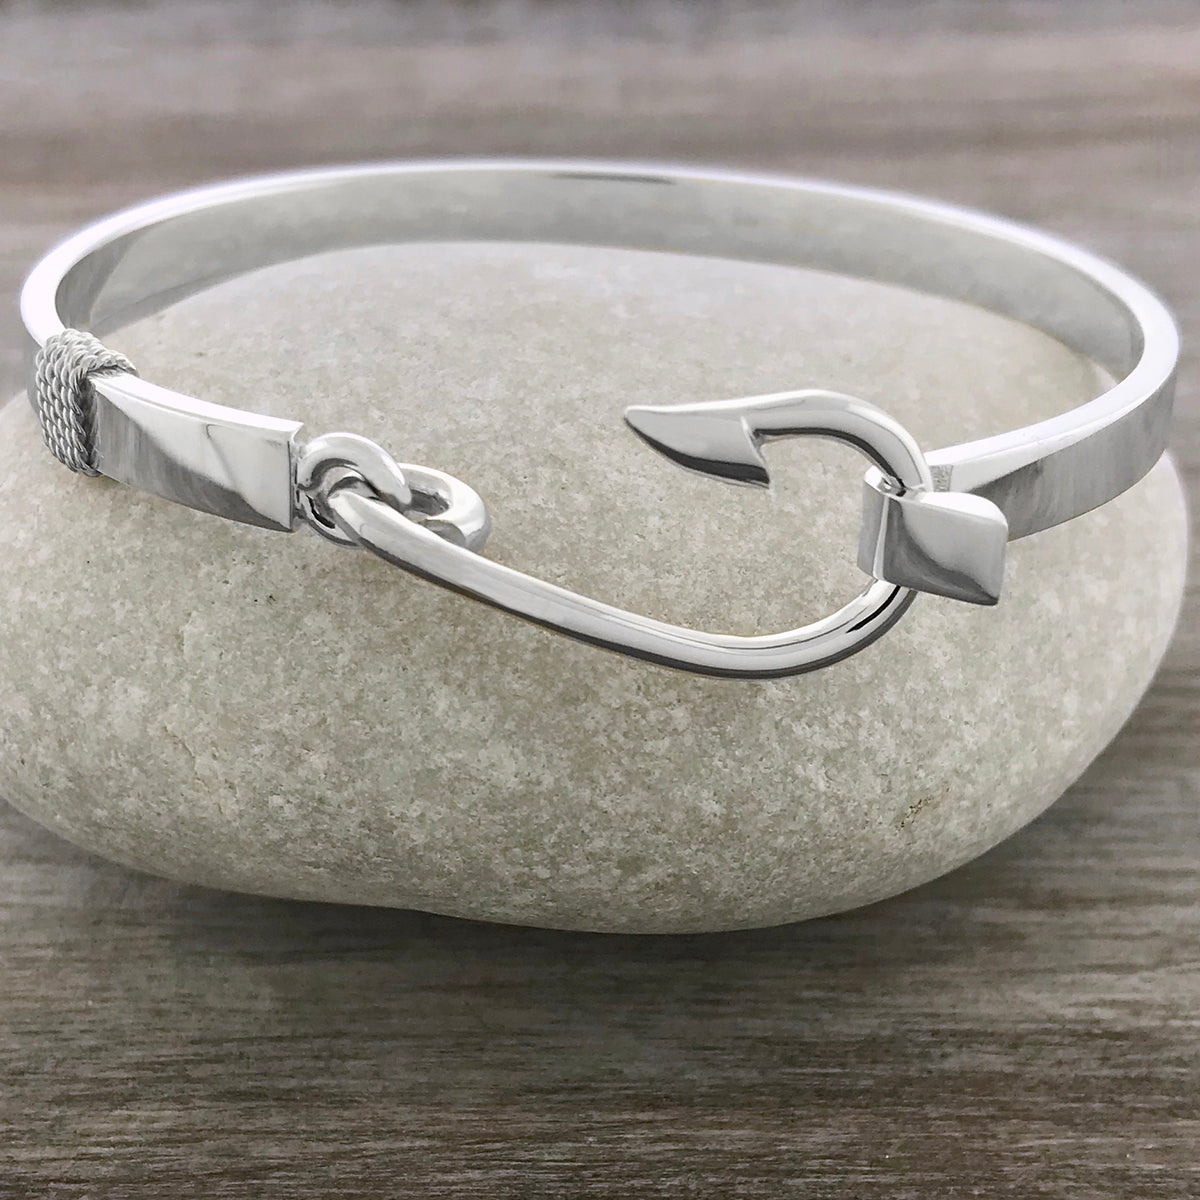 Hooked on You Fish Hook Valentines Bracelet Set of 2 / Adjustable  Waterproof Friendship Bracelets – Just Bead It